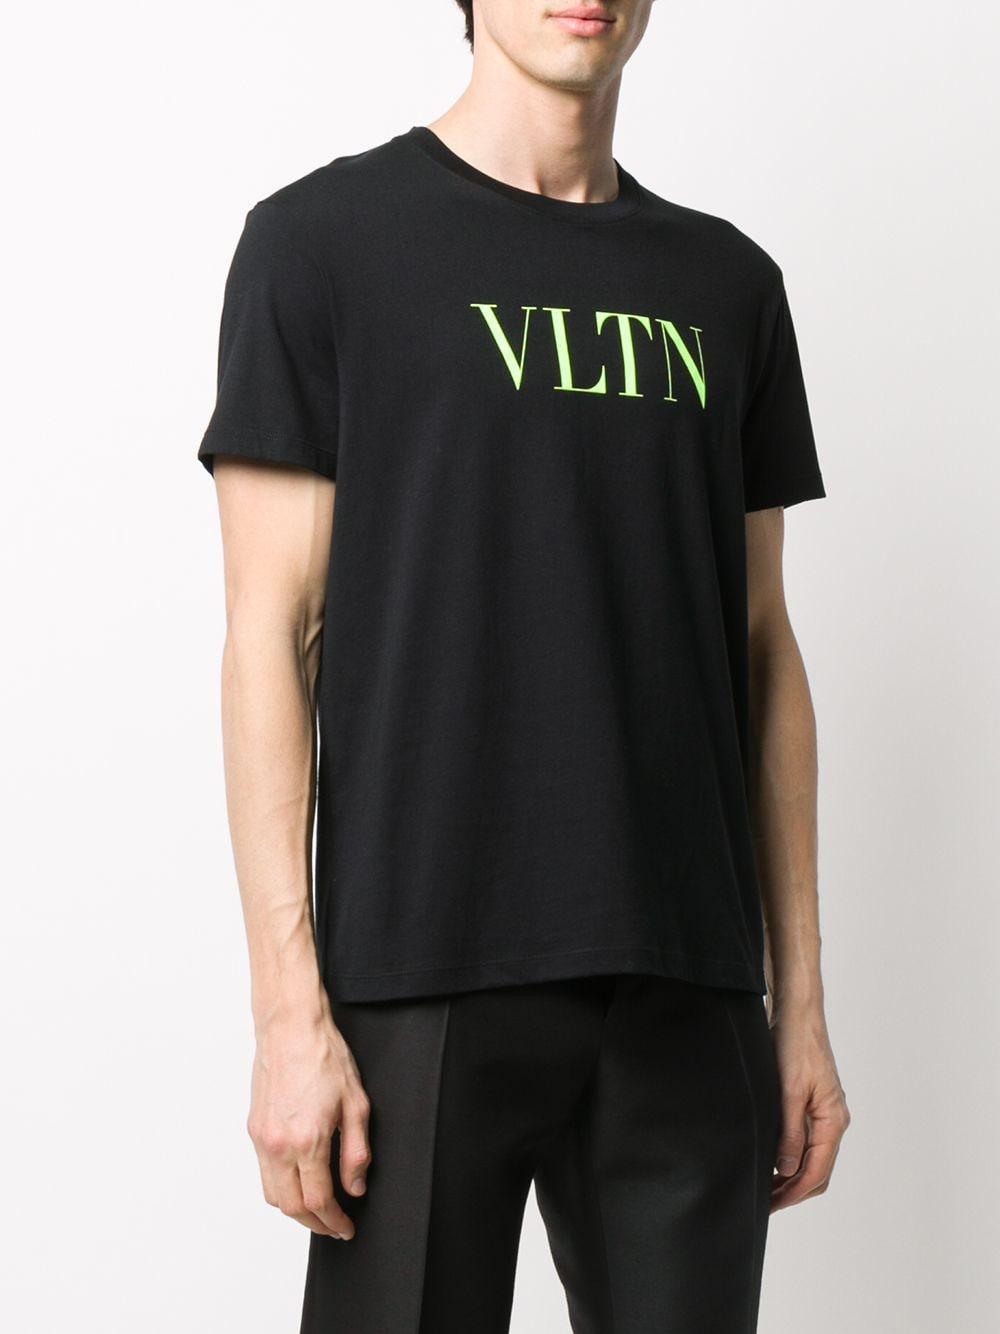 Valentino Cotton Vltn Print T-shirt in Black for Men - Lyst